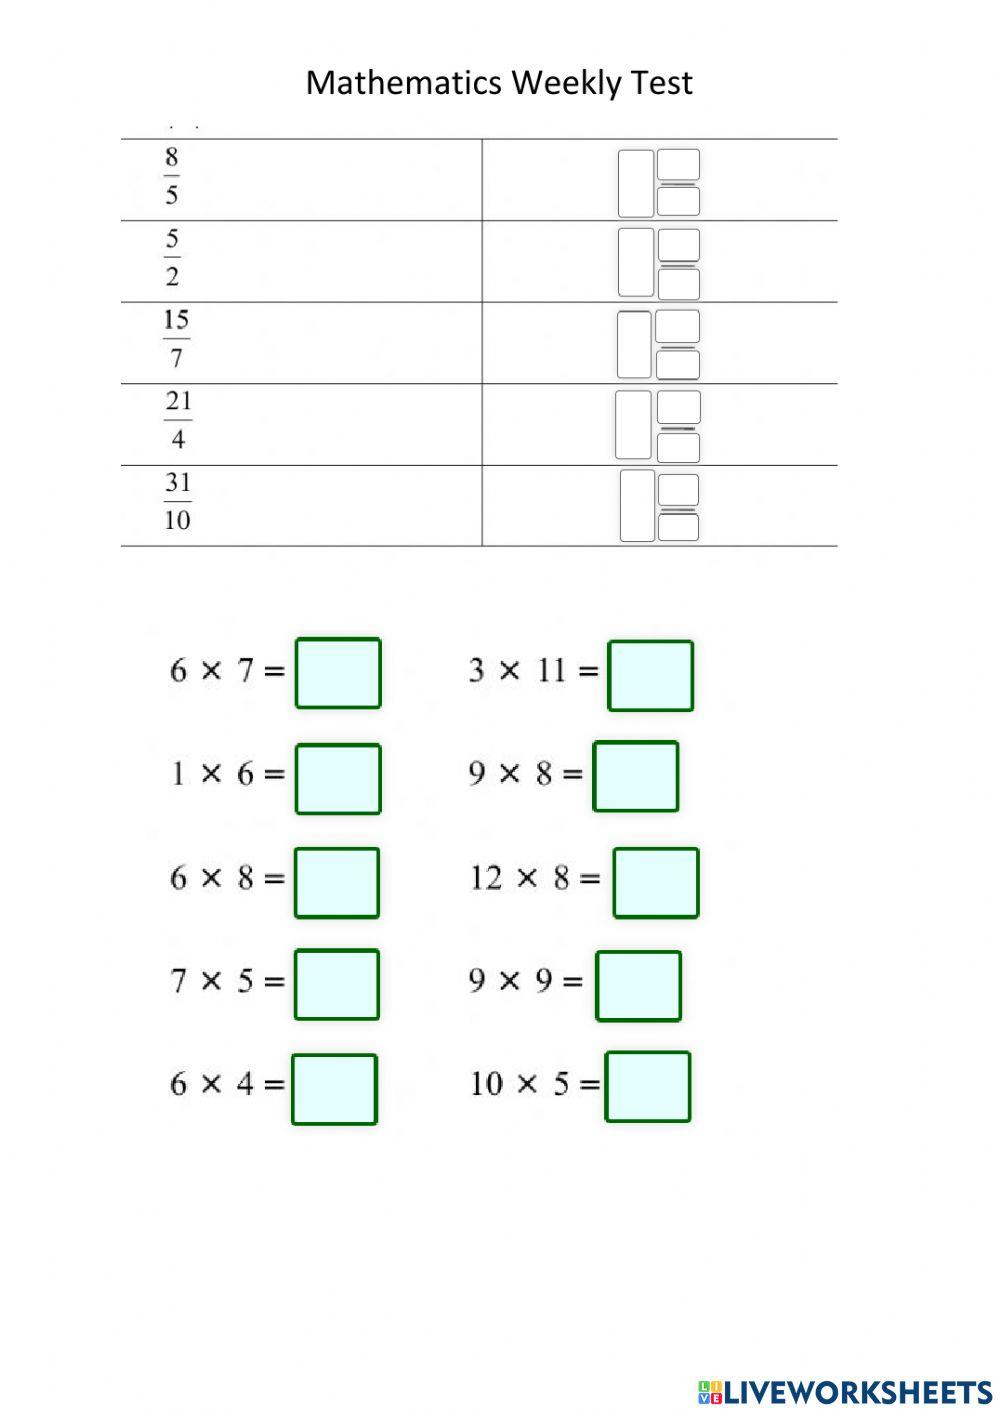 Mathematics Weekly Test 